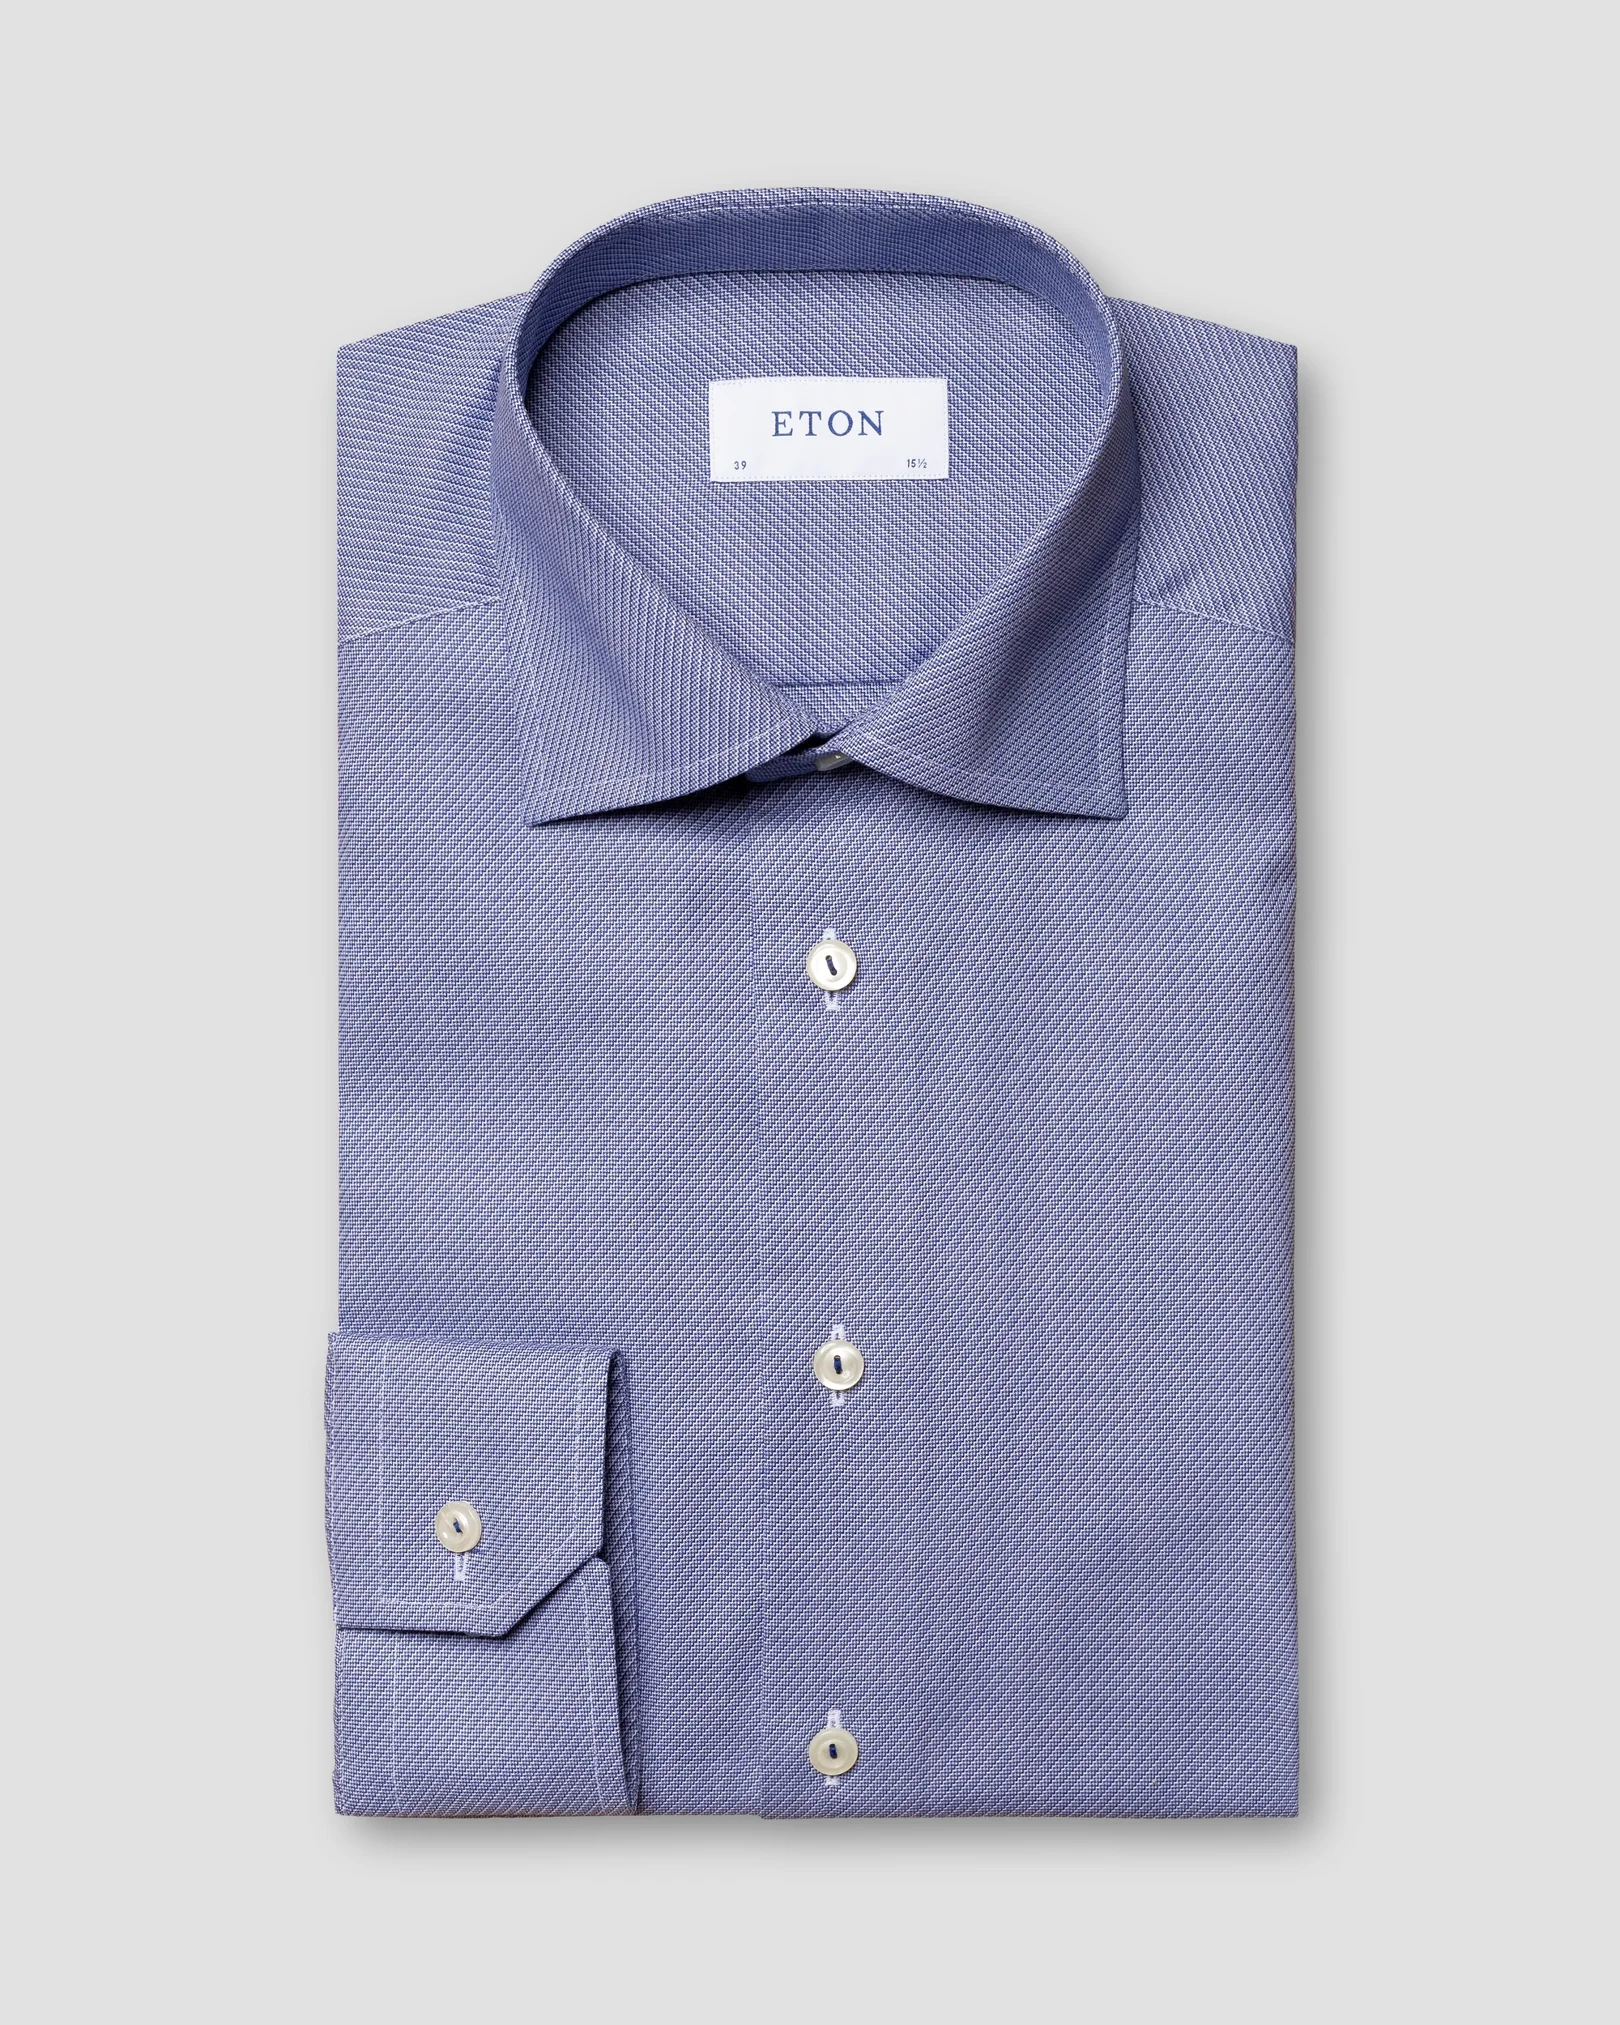 Eton - navy blue twill shirt